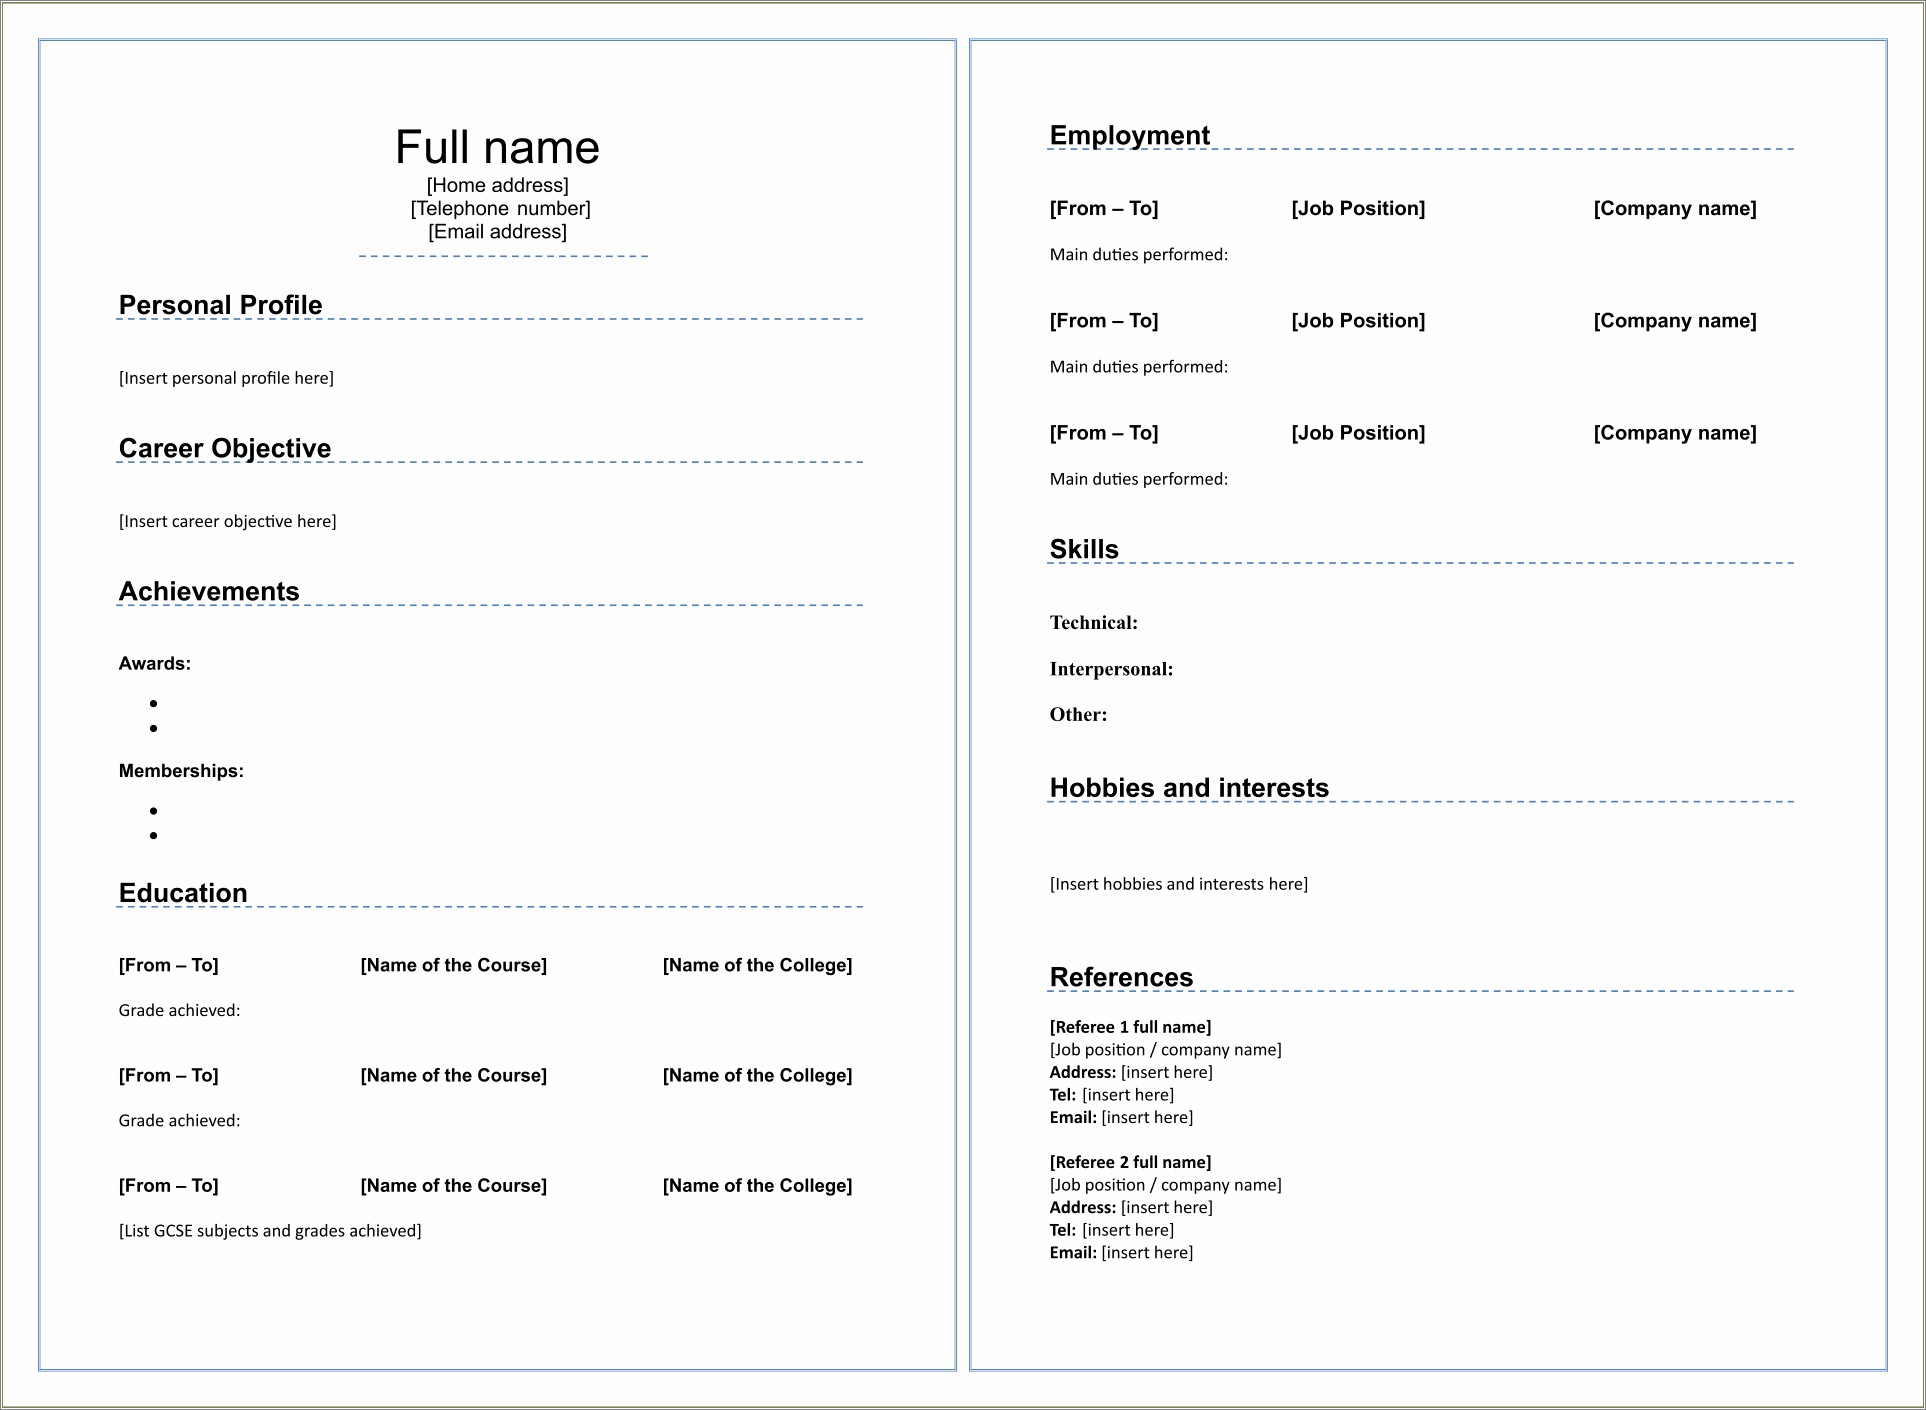 Sample Resume Fill In The Blank